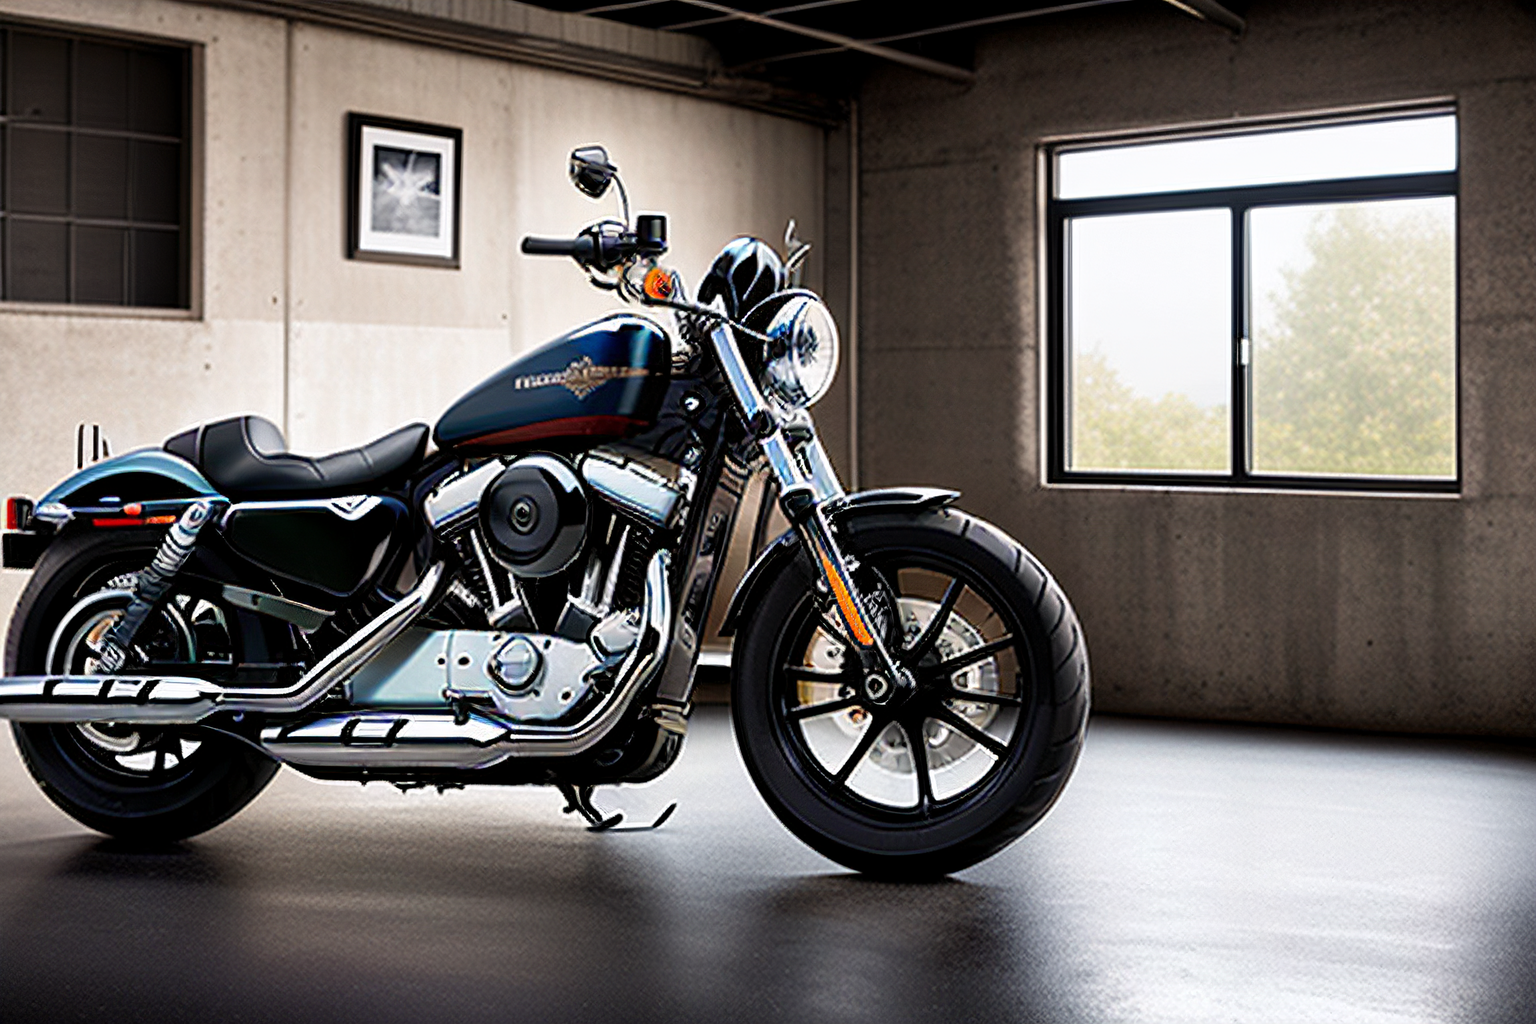 Harley Davidson Sportster Reviews Problems: Insights